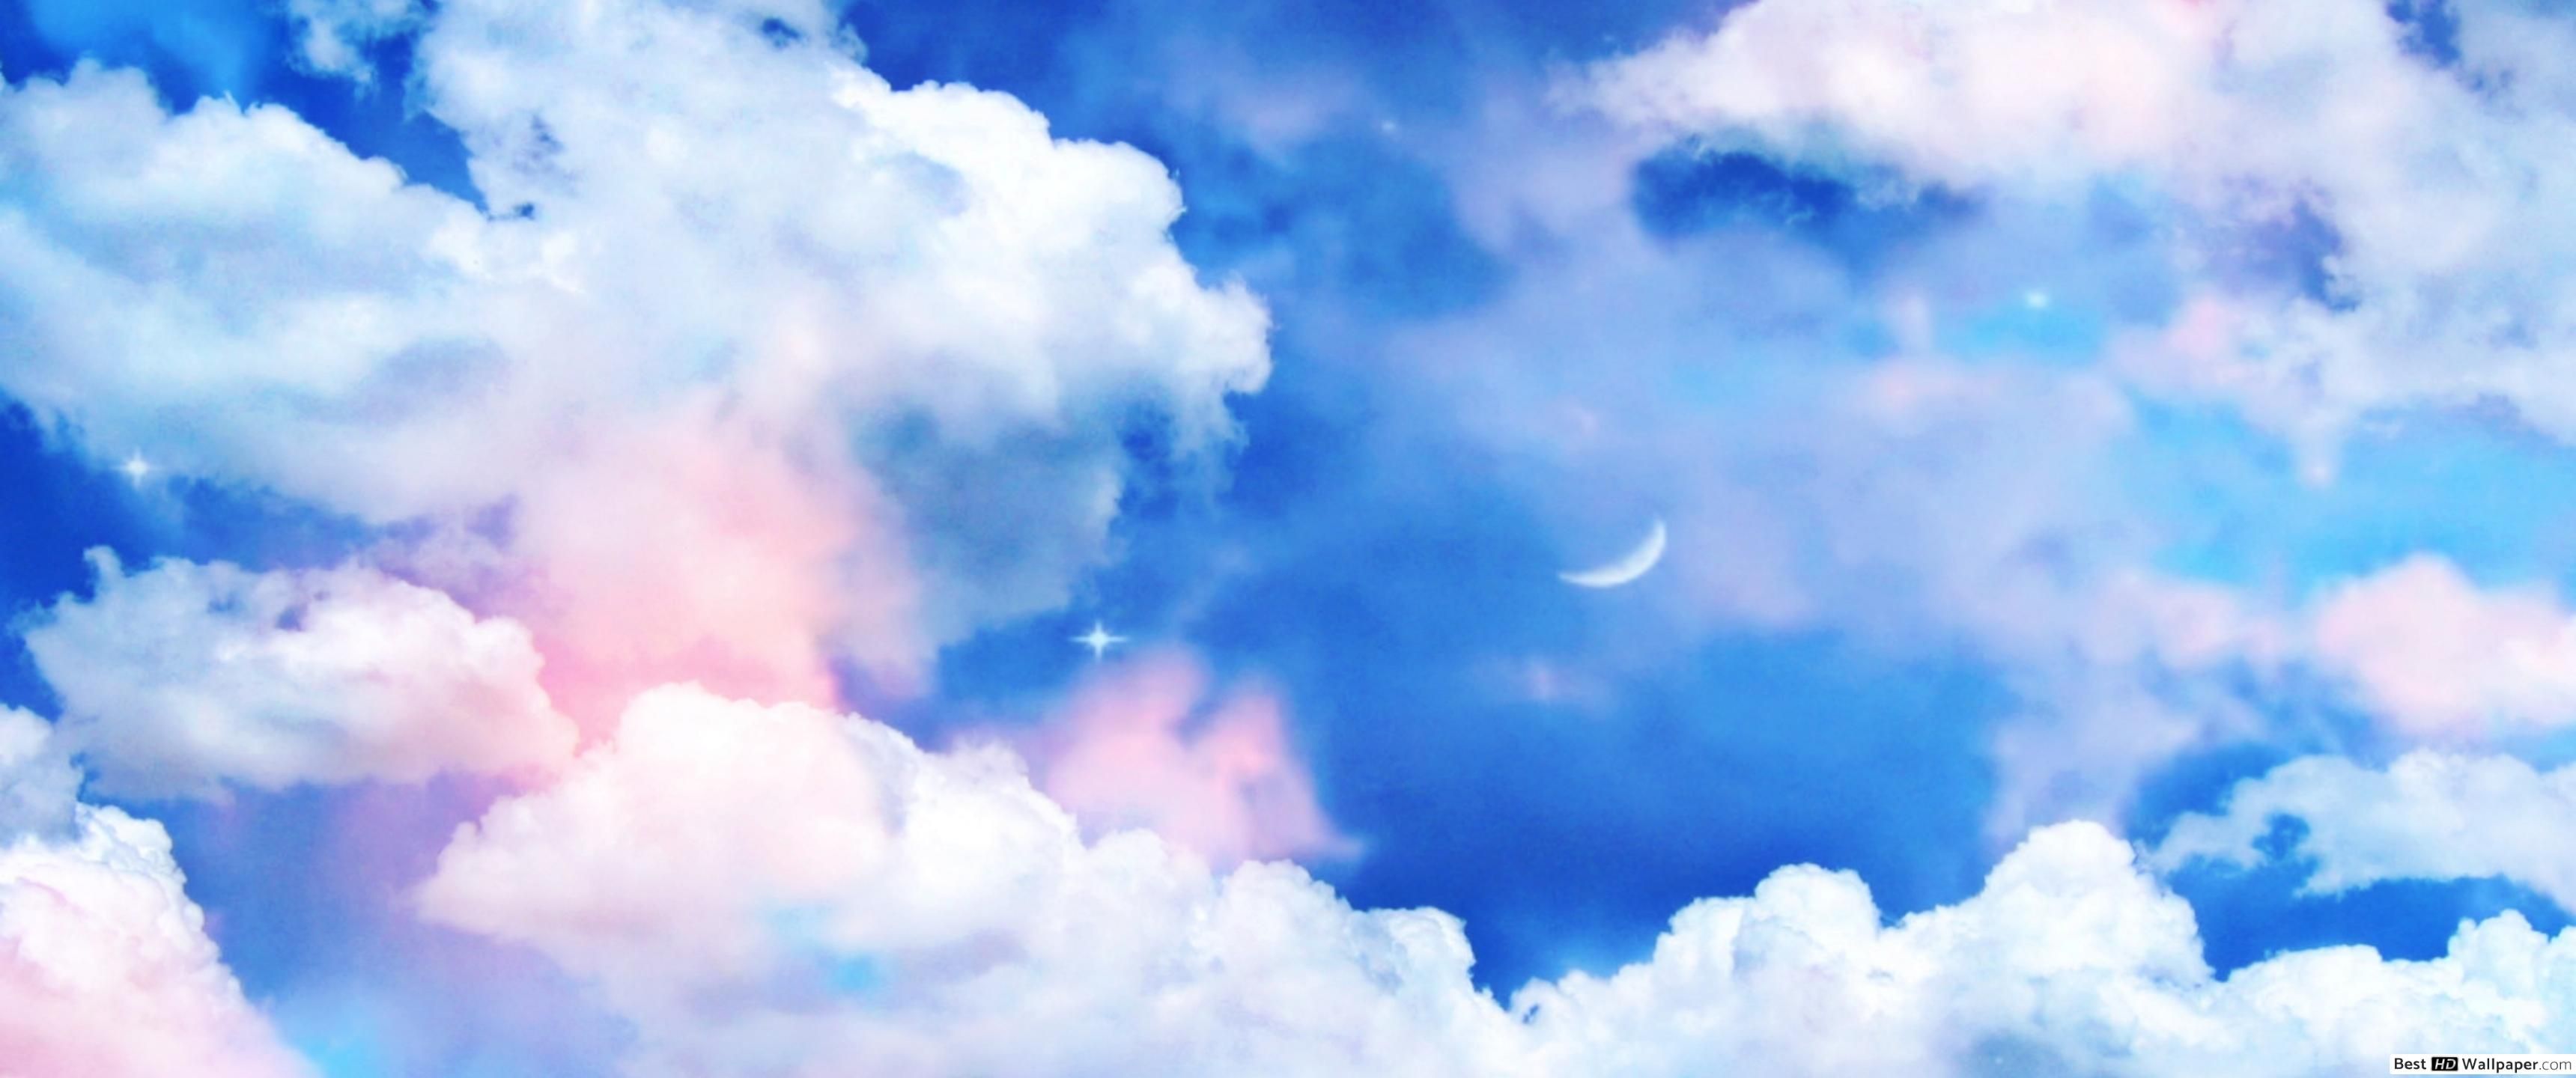 Cloudy night aesthetic wallpaper HD wallpaper download